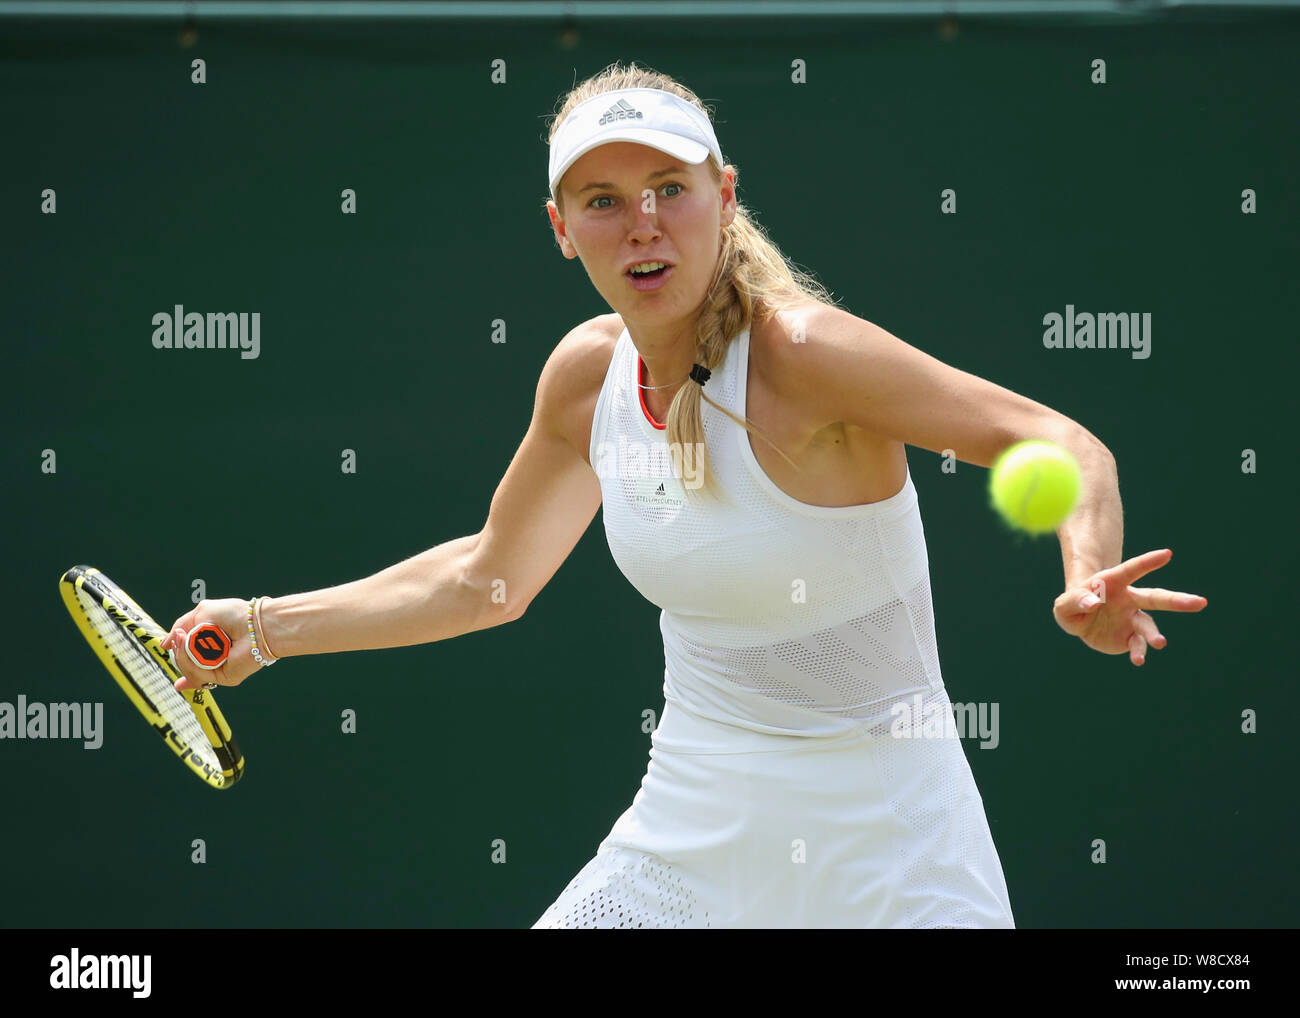 La tenista danesa Caroline Wozniacki jugando forehand rodada durante 2019 campeonatos de Wimbledon, Londres, Inglaterra, Reino Unido Foto de stock